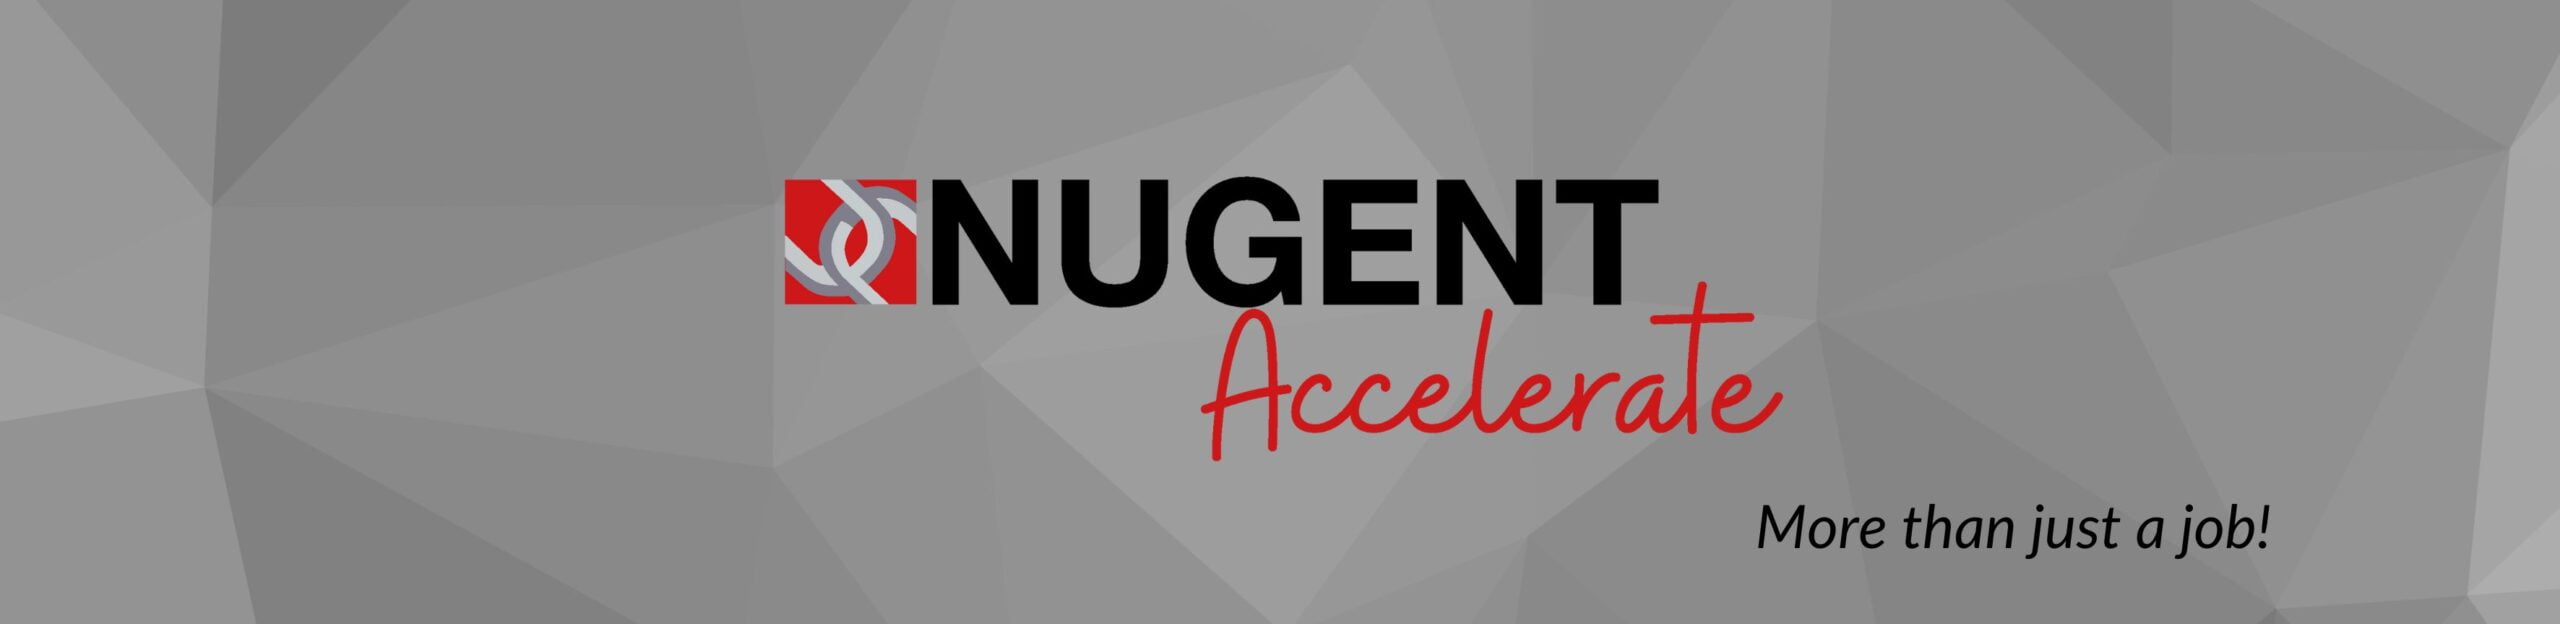 Nugent Accelerate